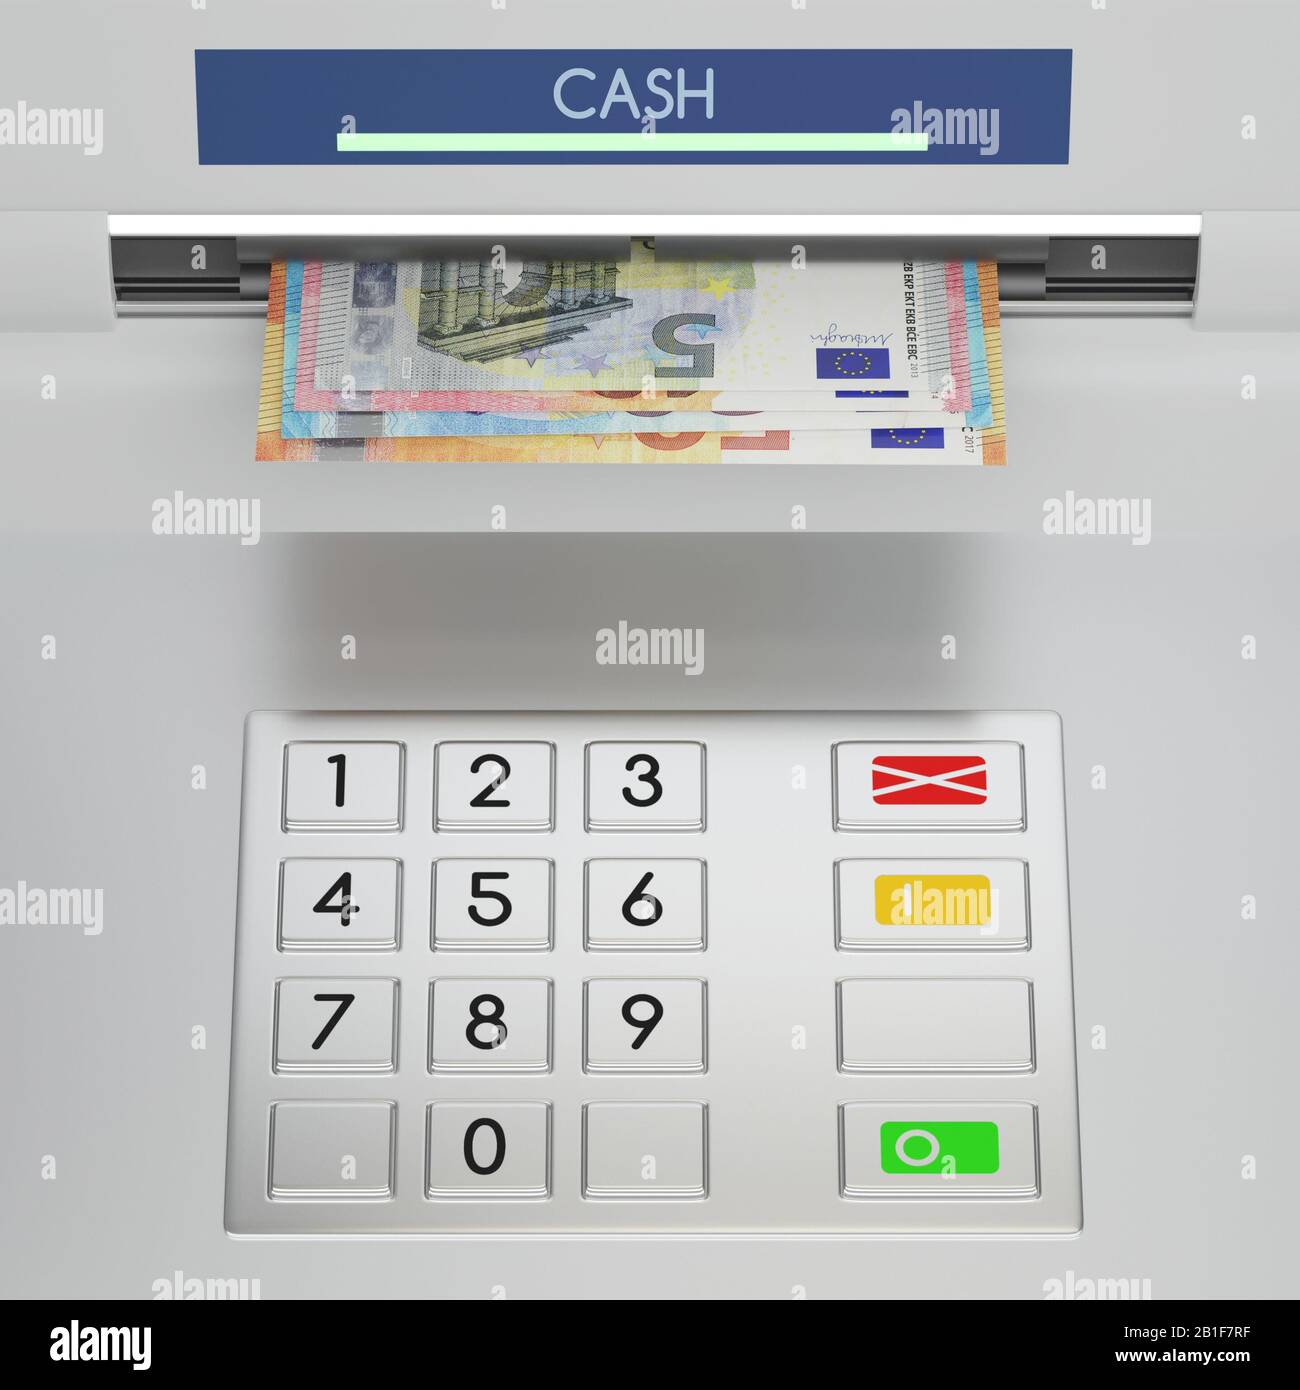 Atm machine keypad with euro banknotes Stock Photo